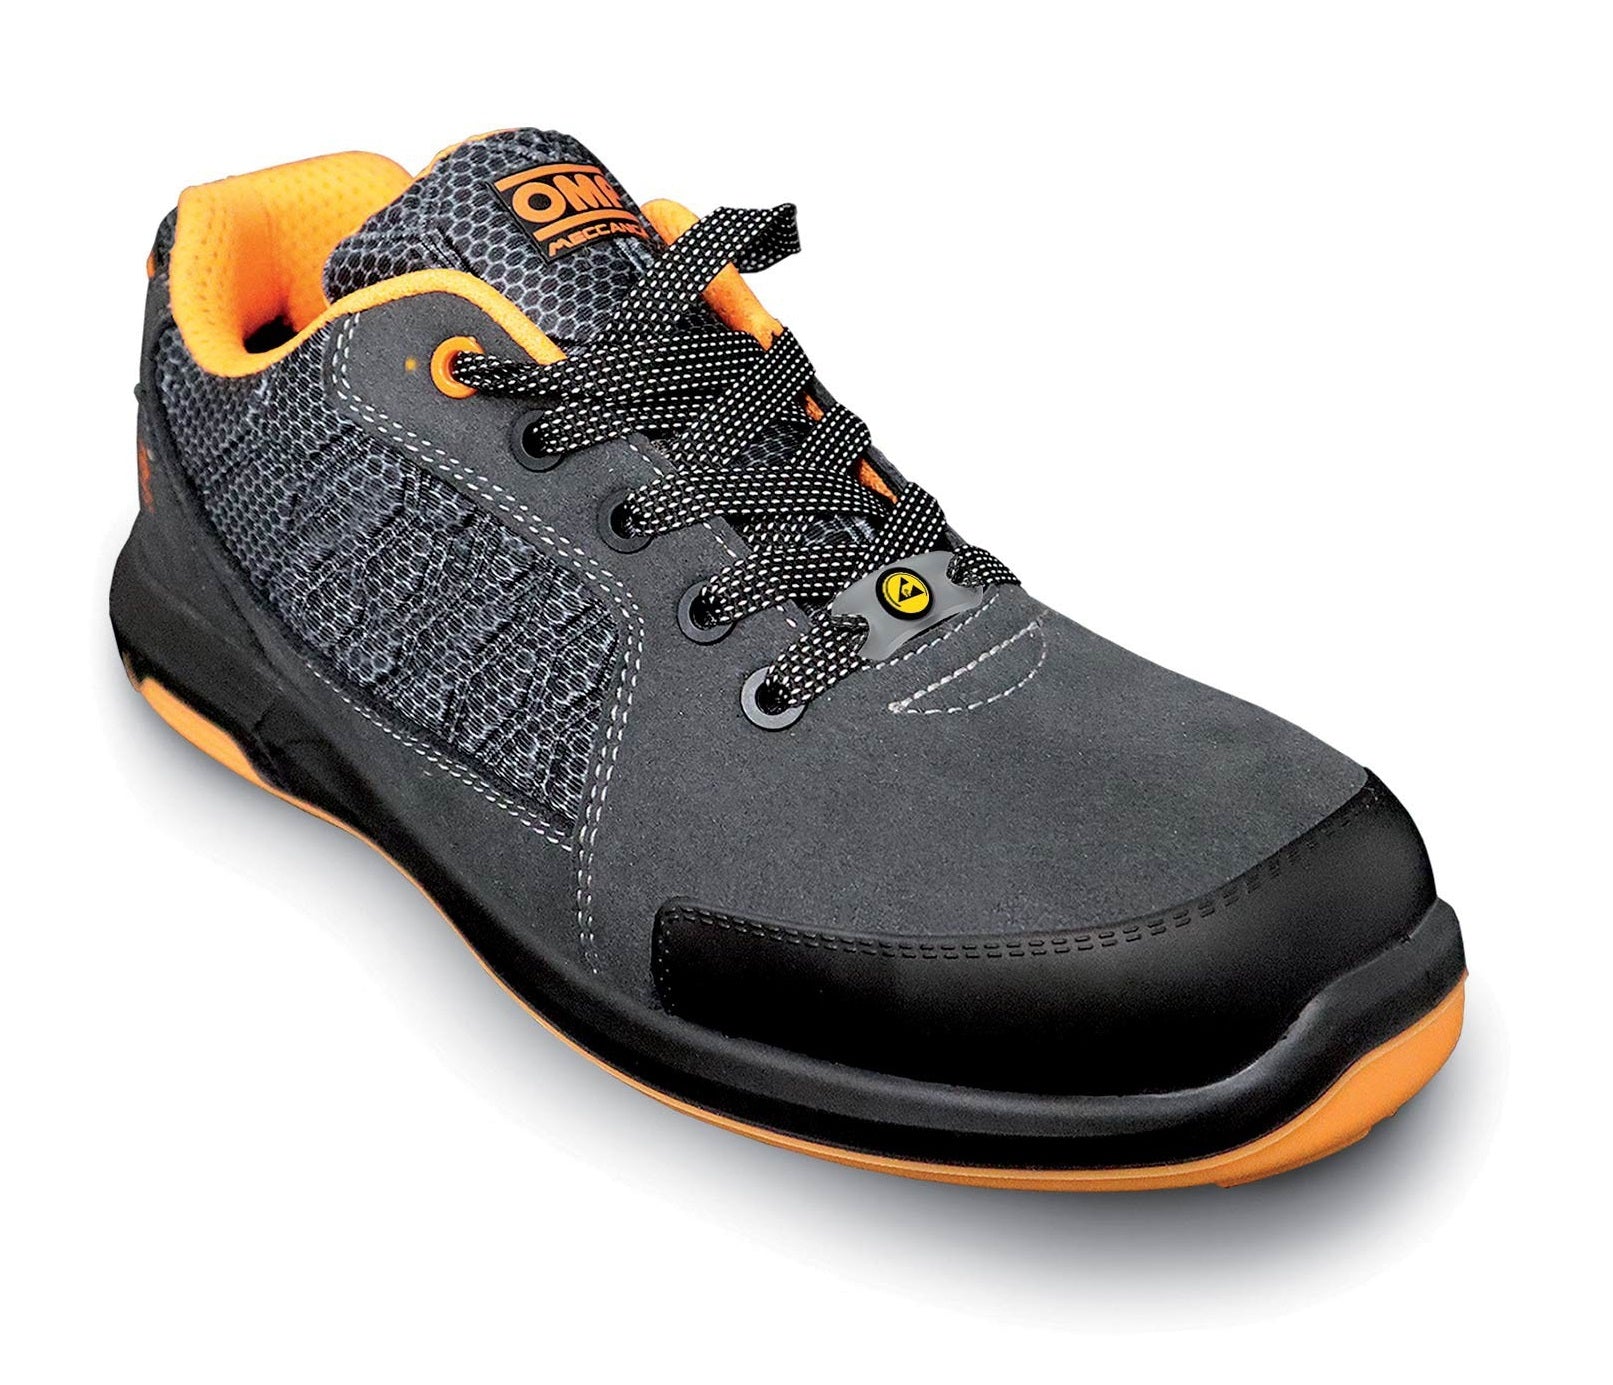 OMP OMPS90013820 Pro Sport Safety Mechanic's shoes, black/orange, size 38 Photo-0 